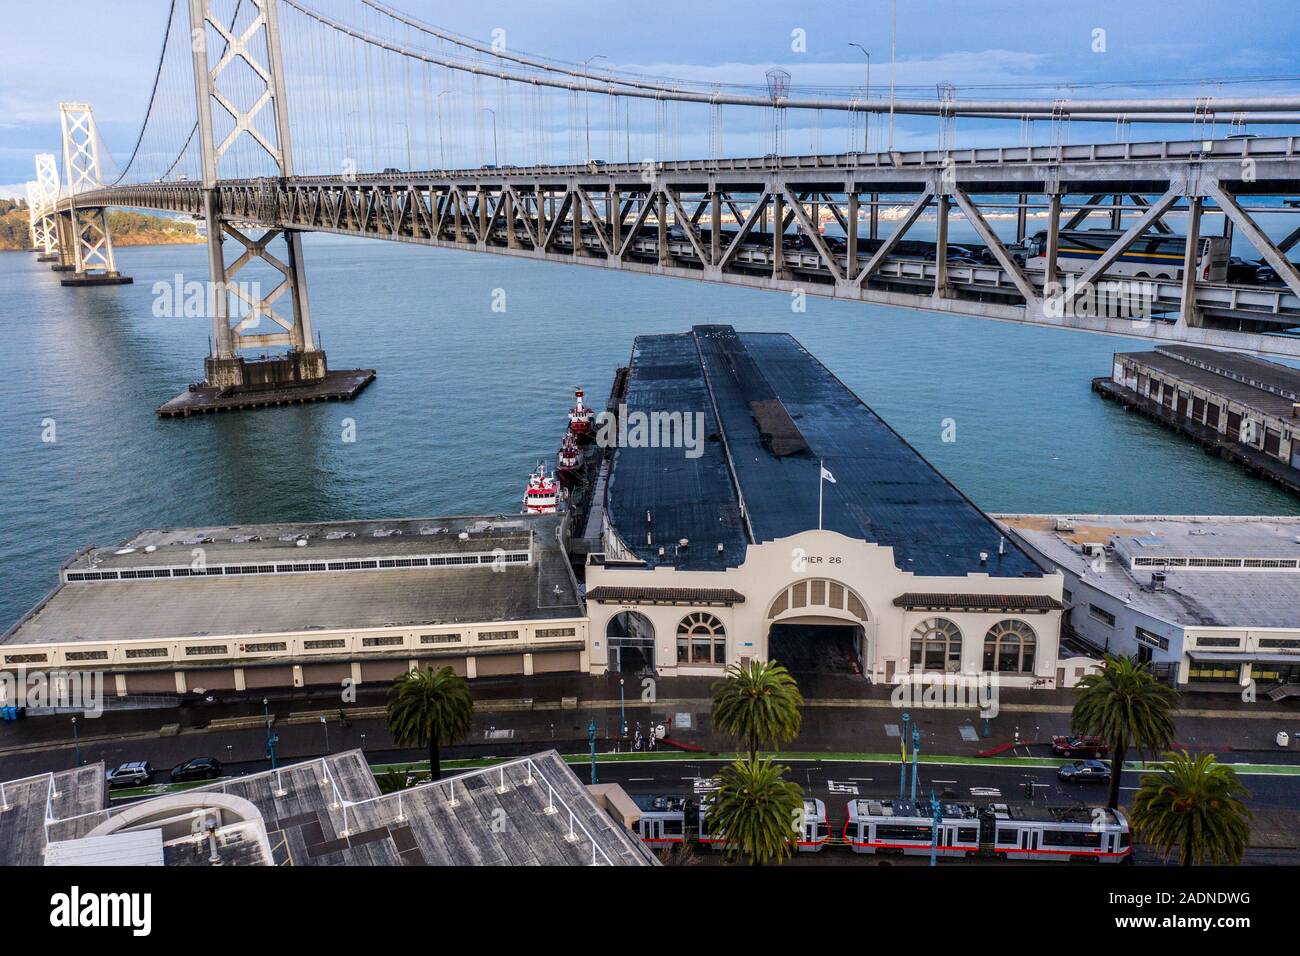 Pier 24 Photography Gallery (and Pier 26), Embarcadero, San Francisco, CA, USA Stock Photo